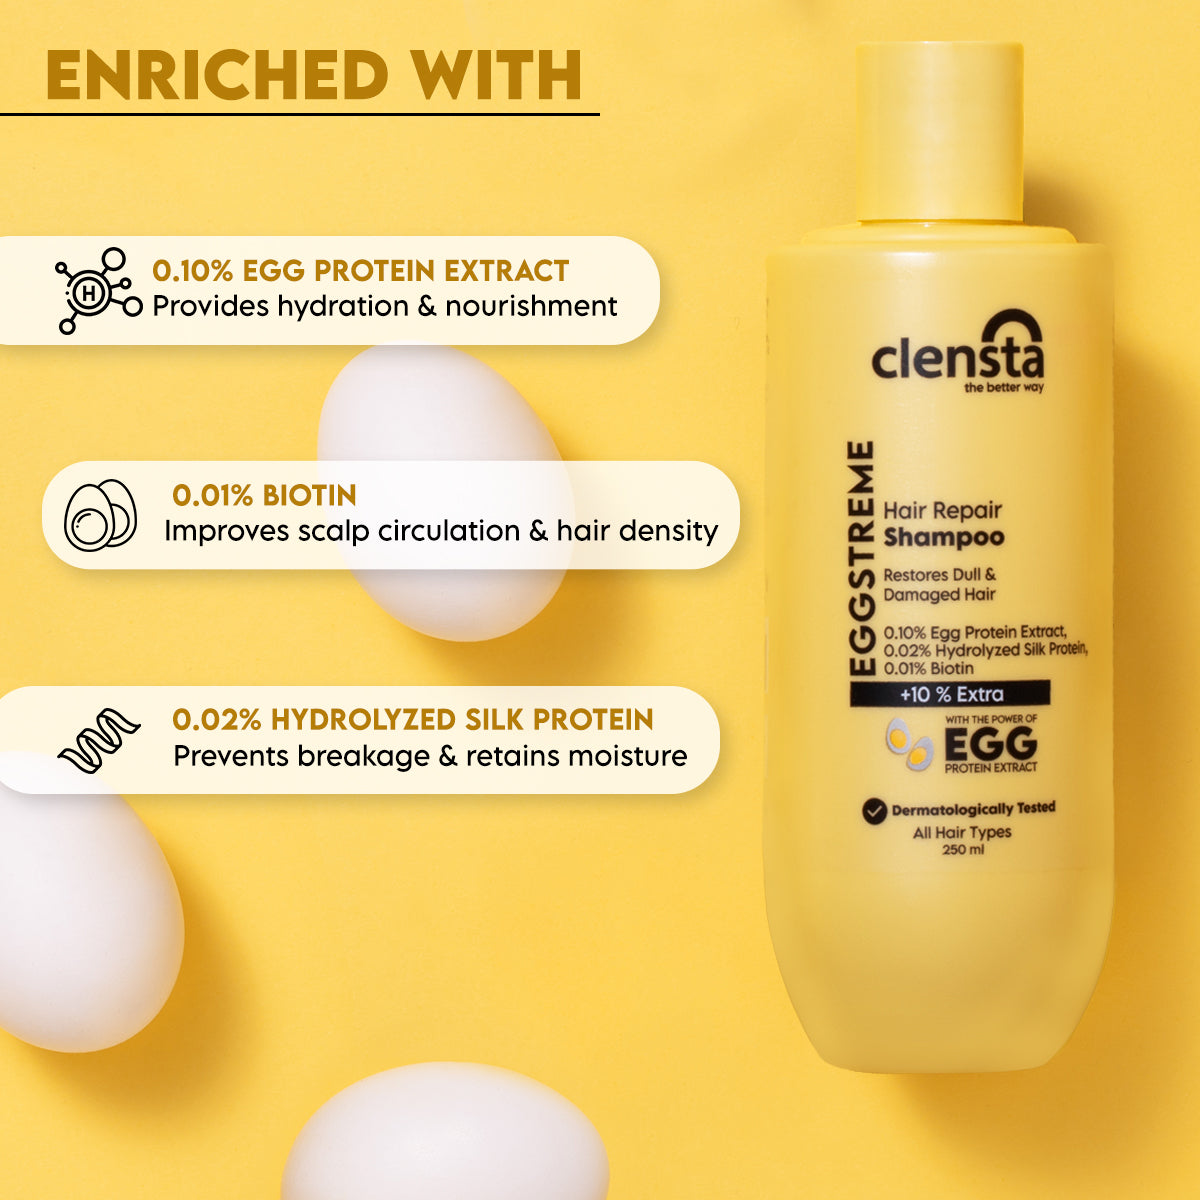 Eggstreme Hair Repair Shampoo with 0.10% Egg Protein Extract, 0.02% Hydrolyzed Silk Protein, 0.01% Biotin